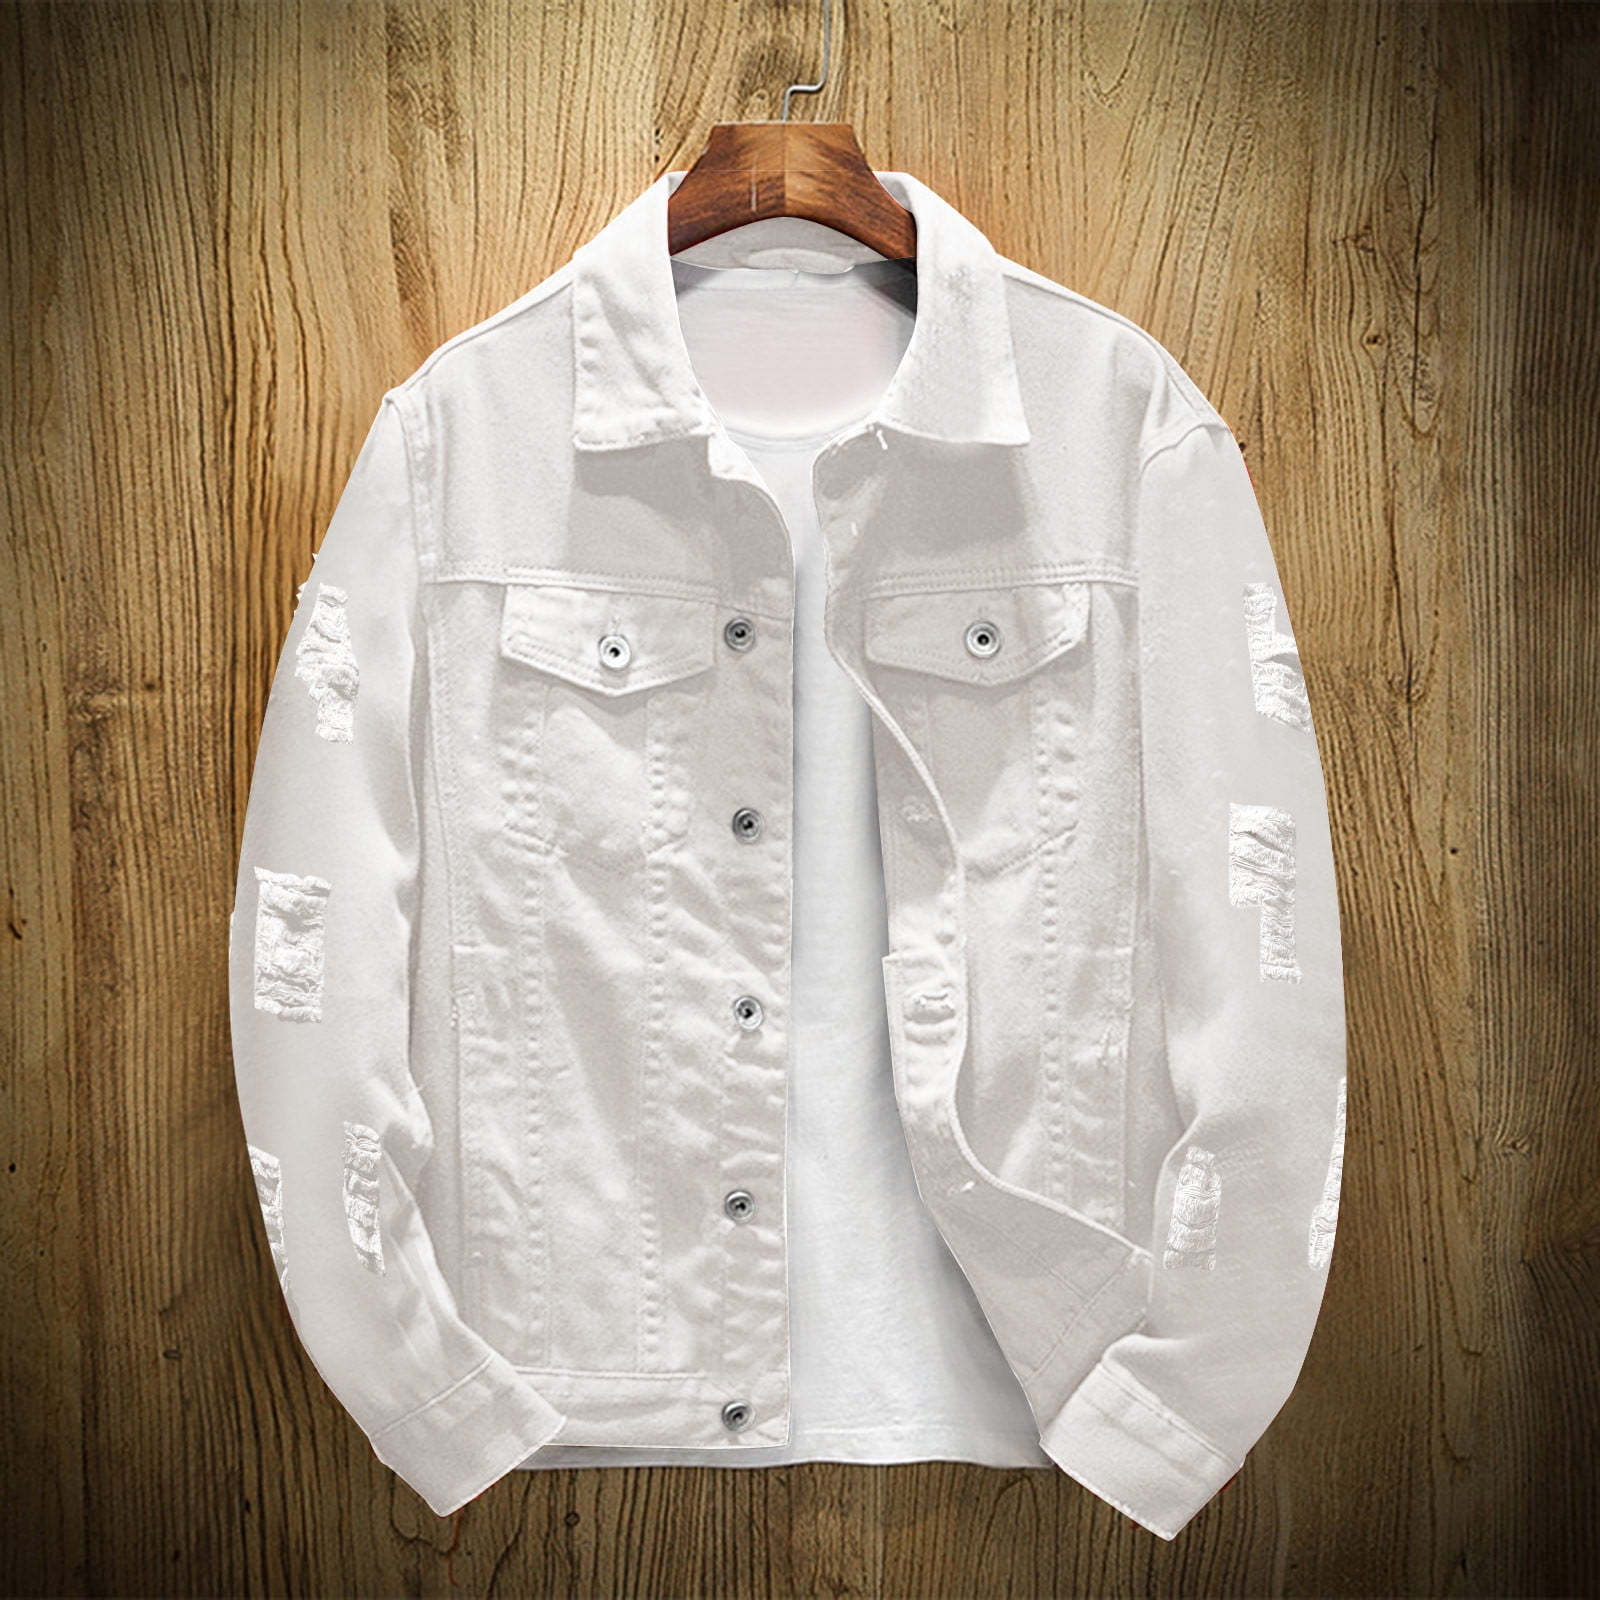 Buy KIDS ONLY White Solid Denim Jacket for Girls Clothing Online @ Tata CLiQ